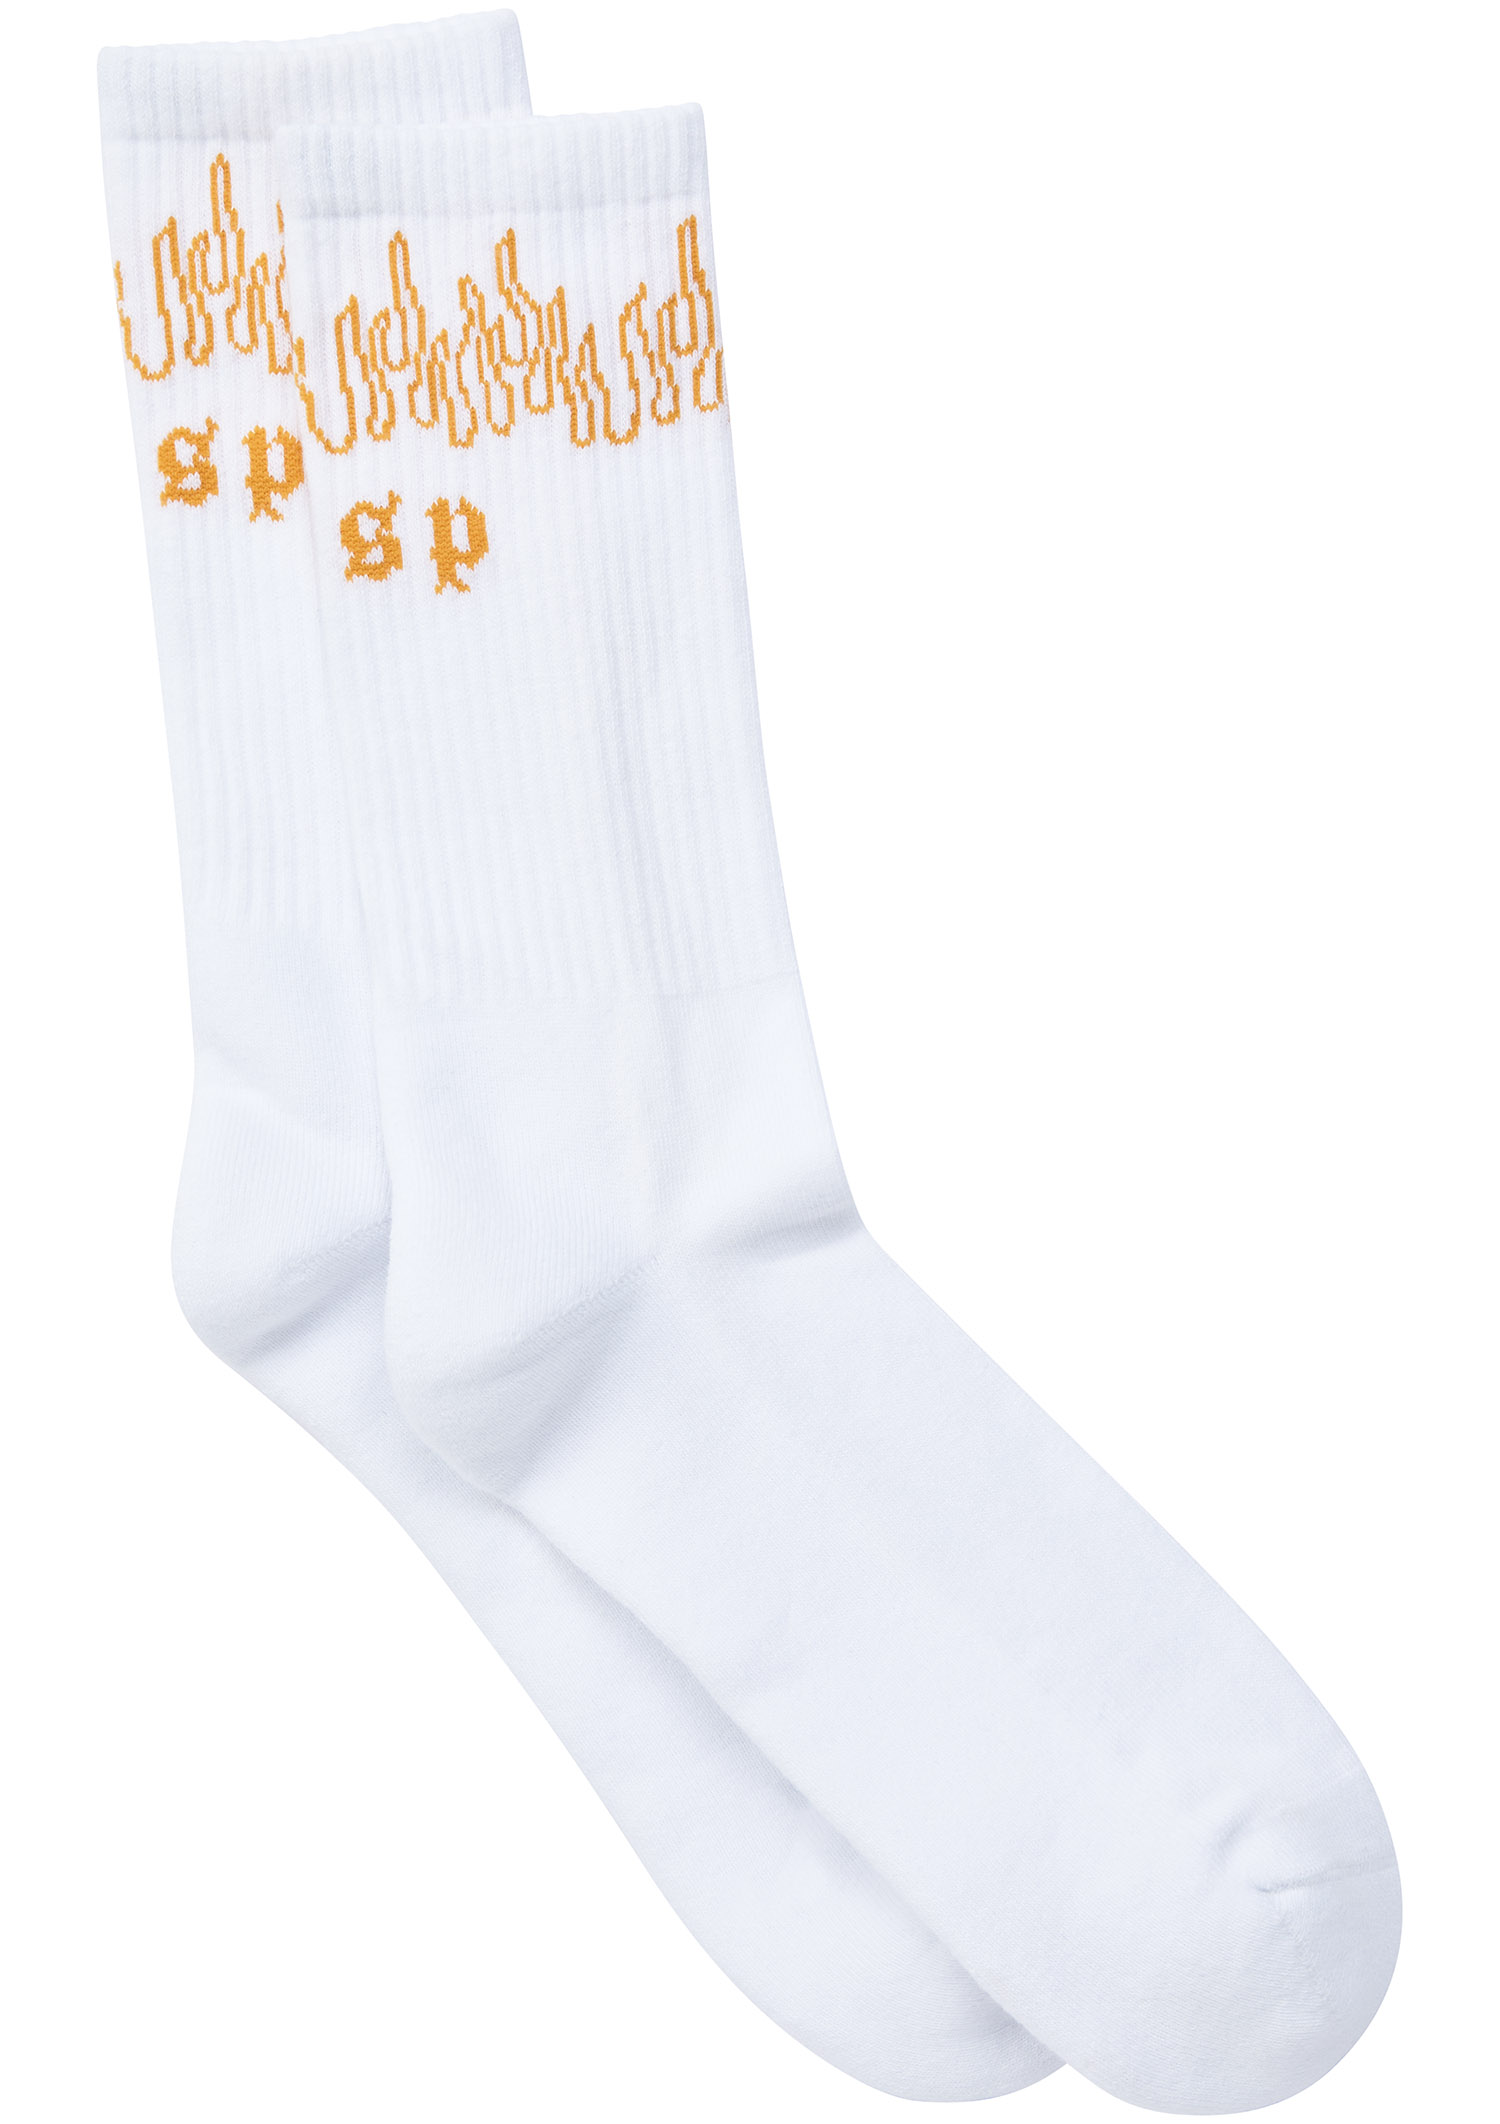 Socks "FCSP Flame" - orange